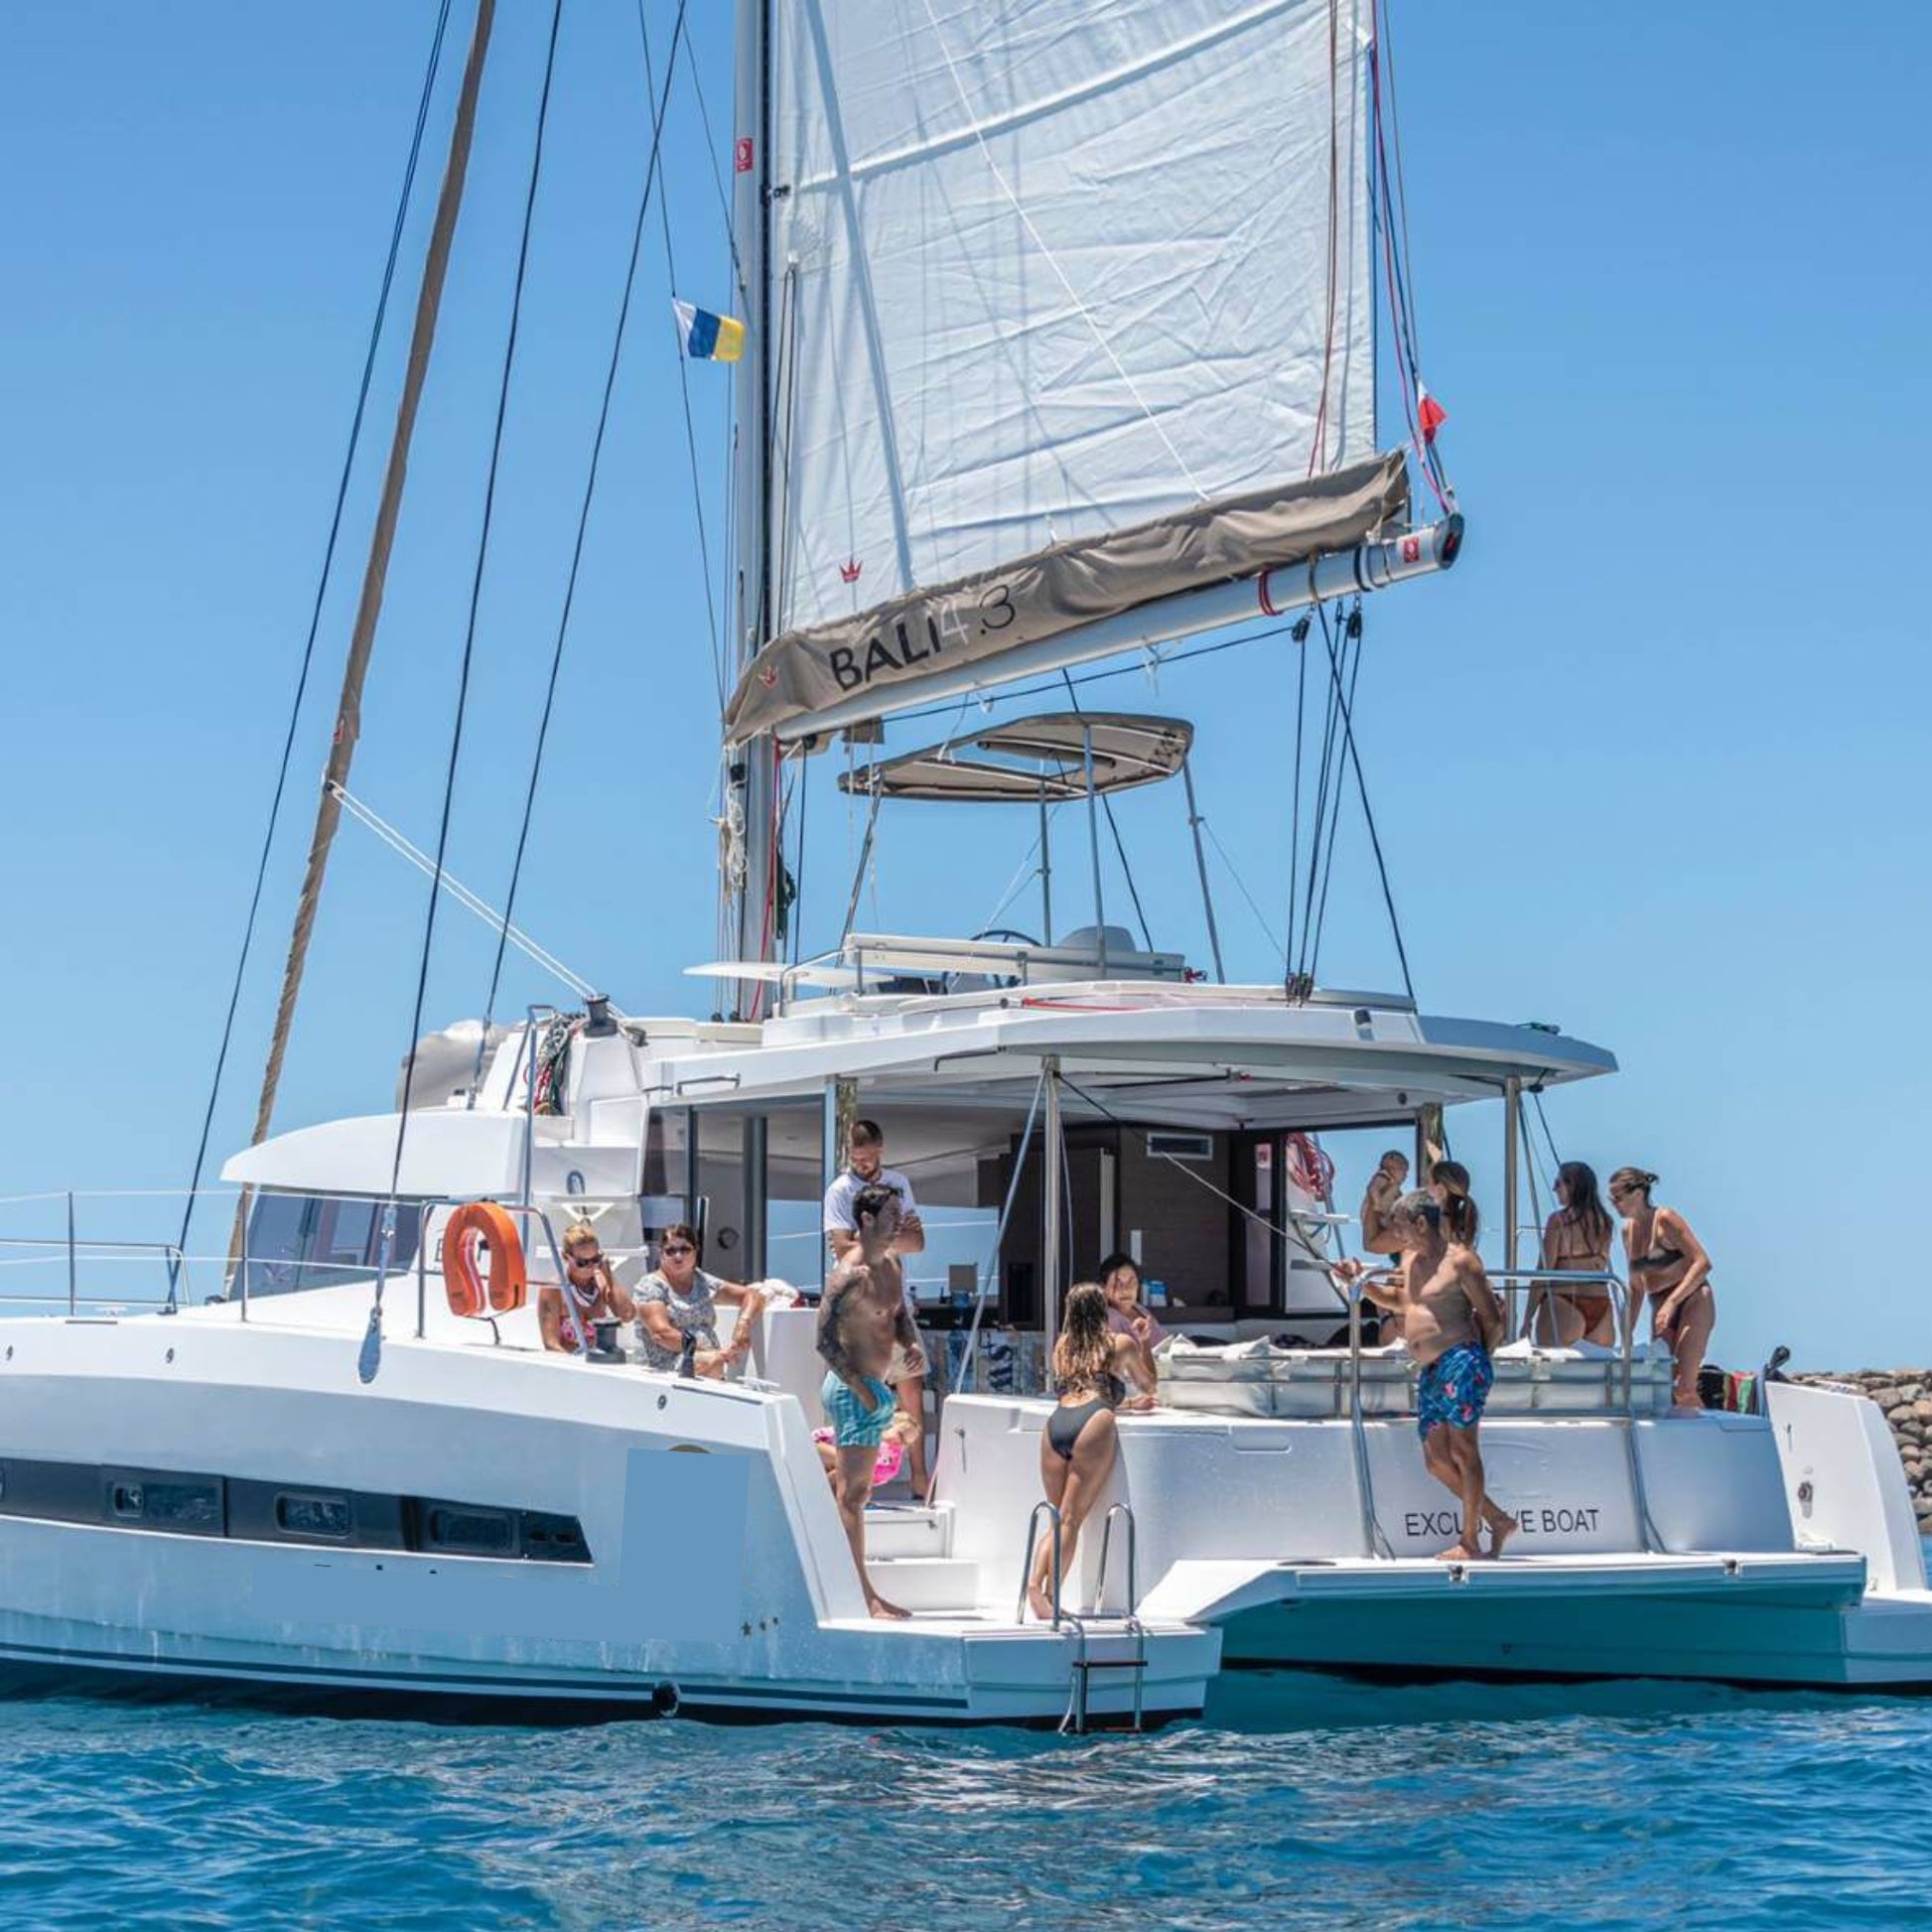 exclusive boat gran canaria - catamaran